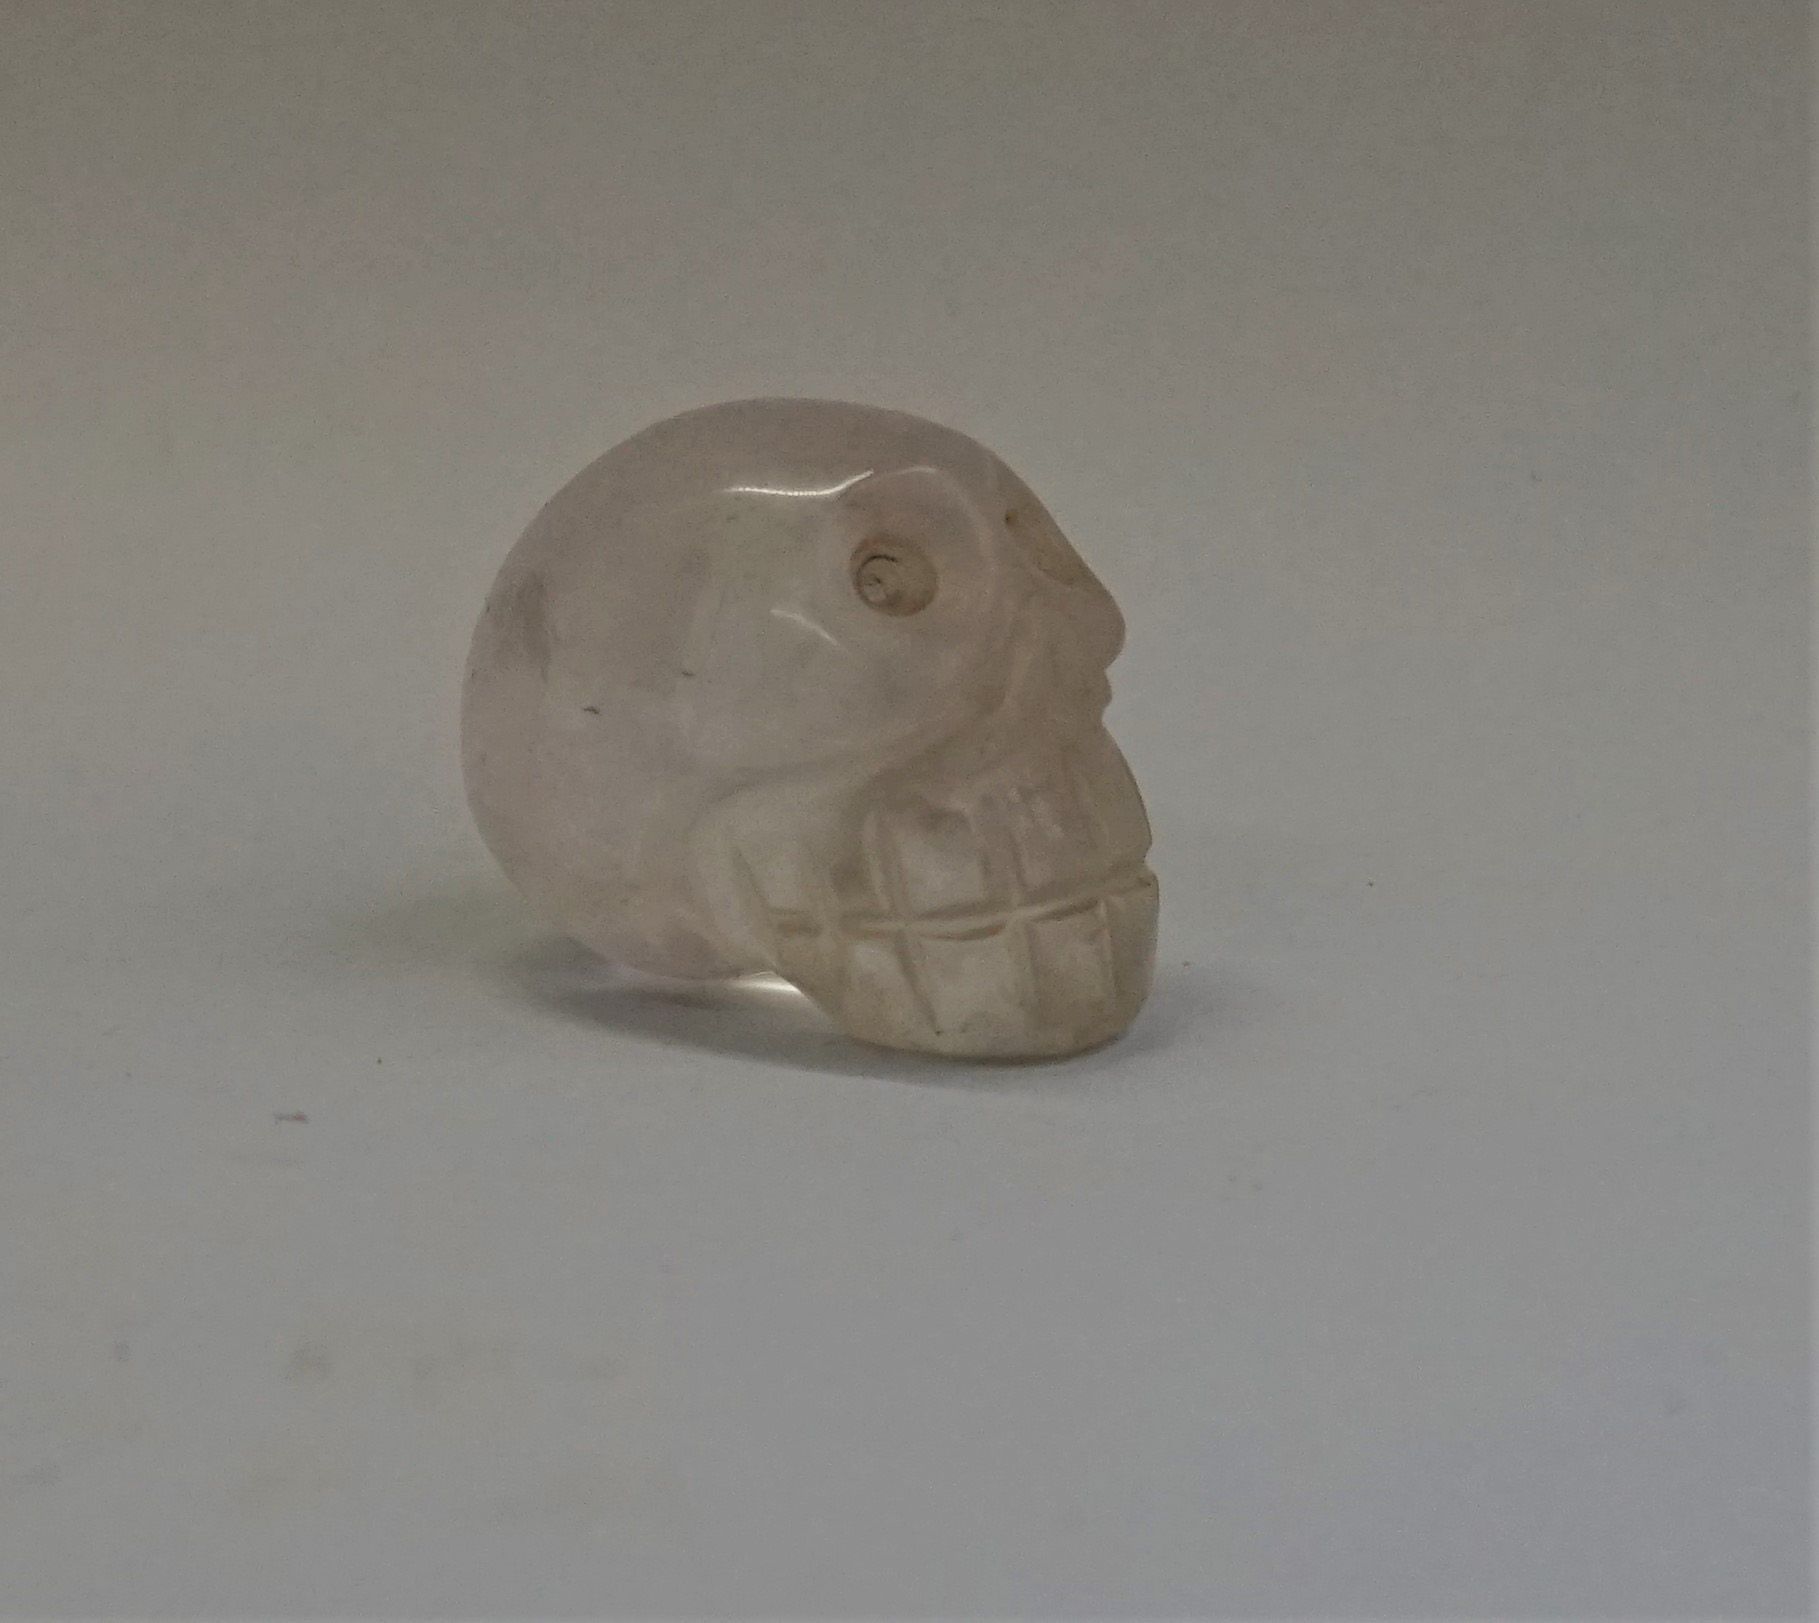 Null 符合前哥伦布时期阿兹特克艺术传统的岩石水晶头骨。在扣子的水平上有双锥孔。墨西哥。

5x4cm